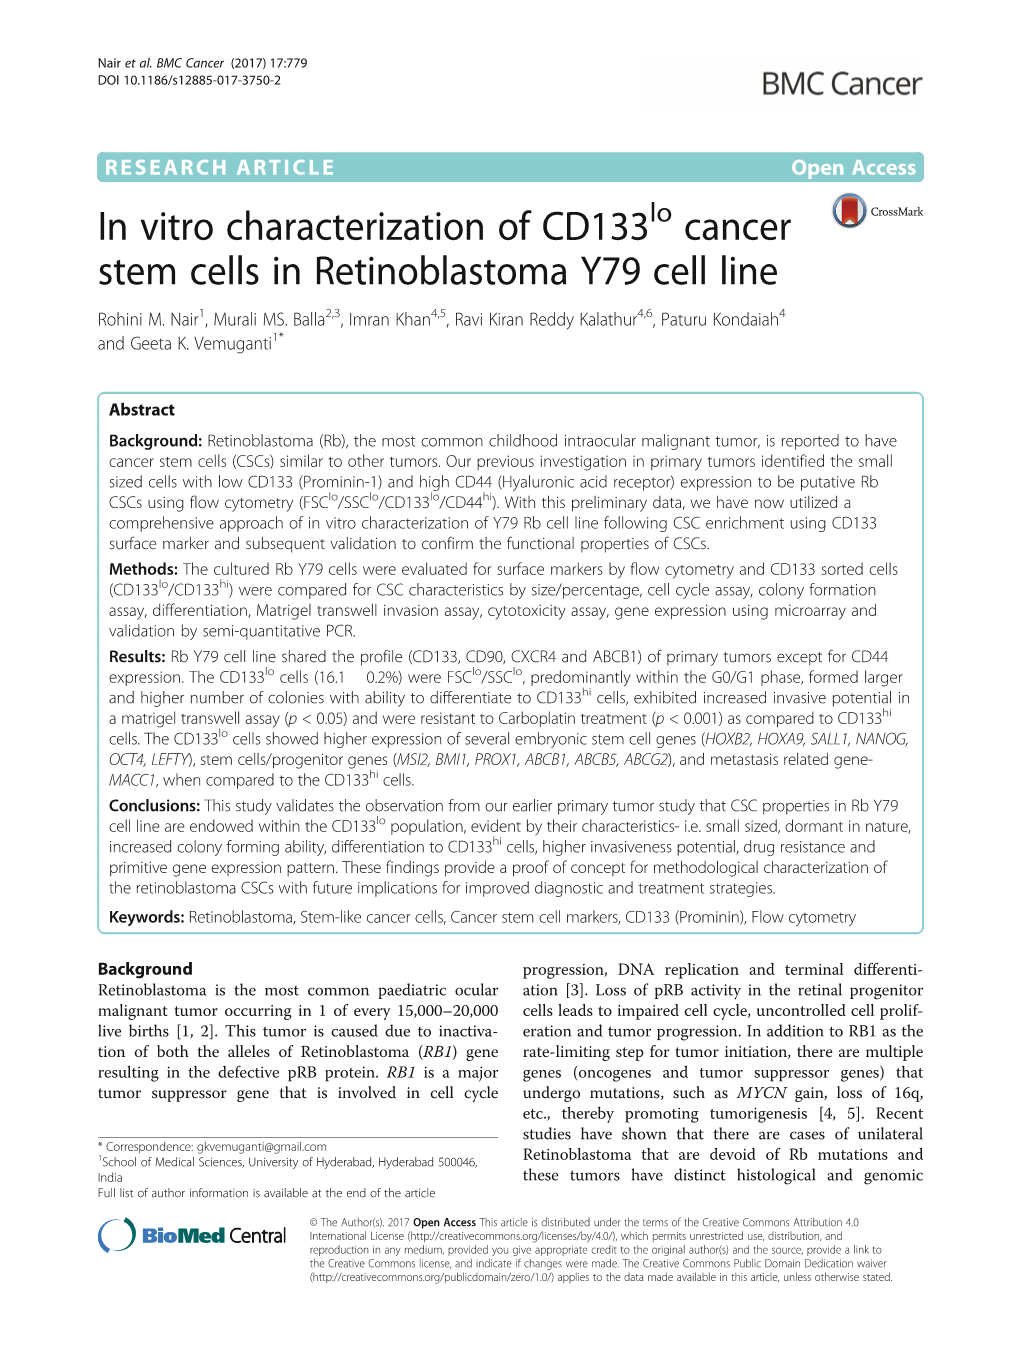 In Vitro Characterization of Cd133lo Cancer Stem Cells in Retinoblastoma Y79 Cell Line Rohini M